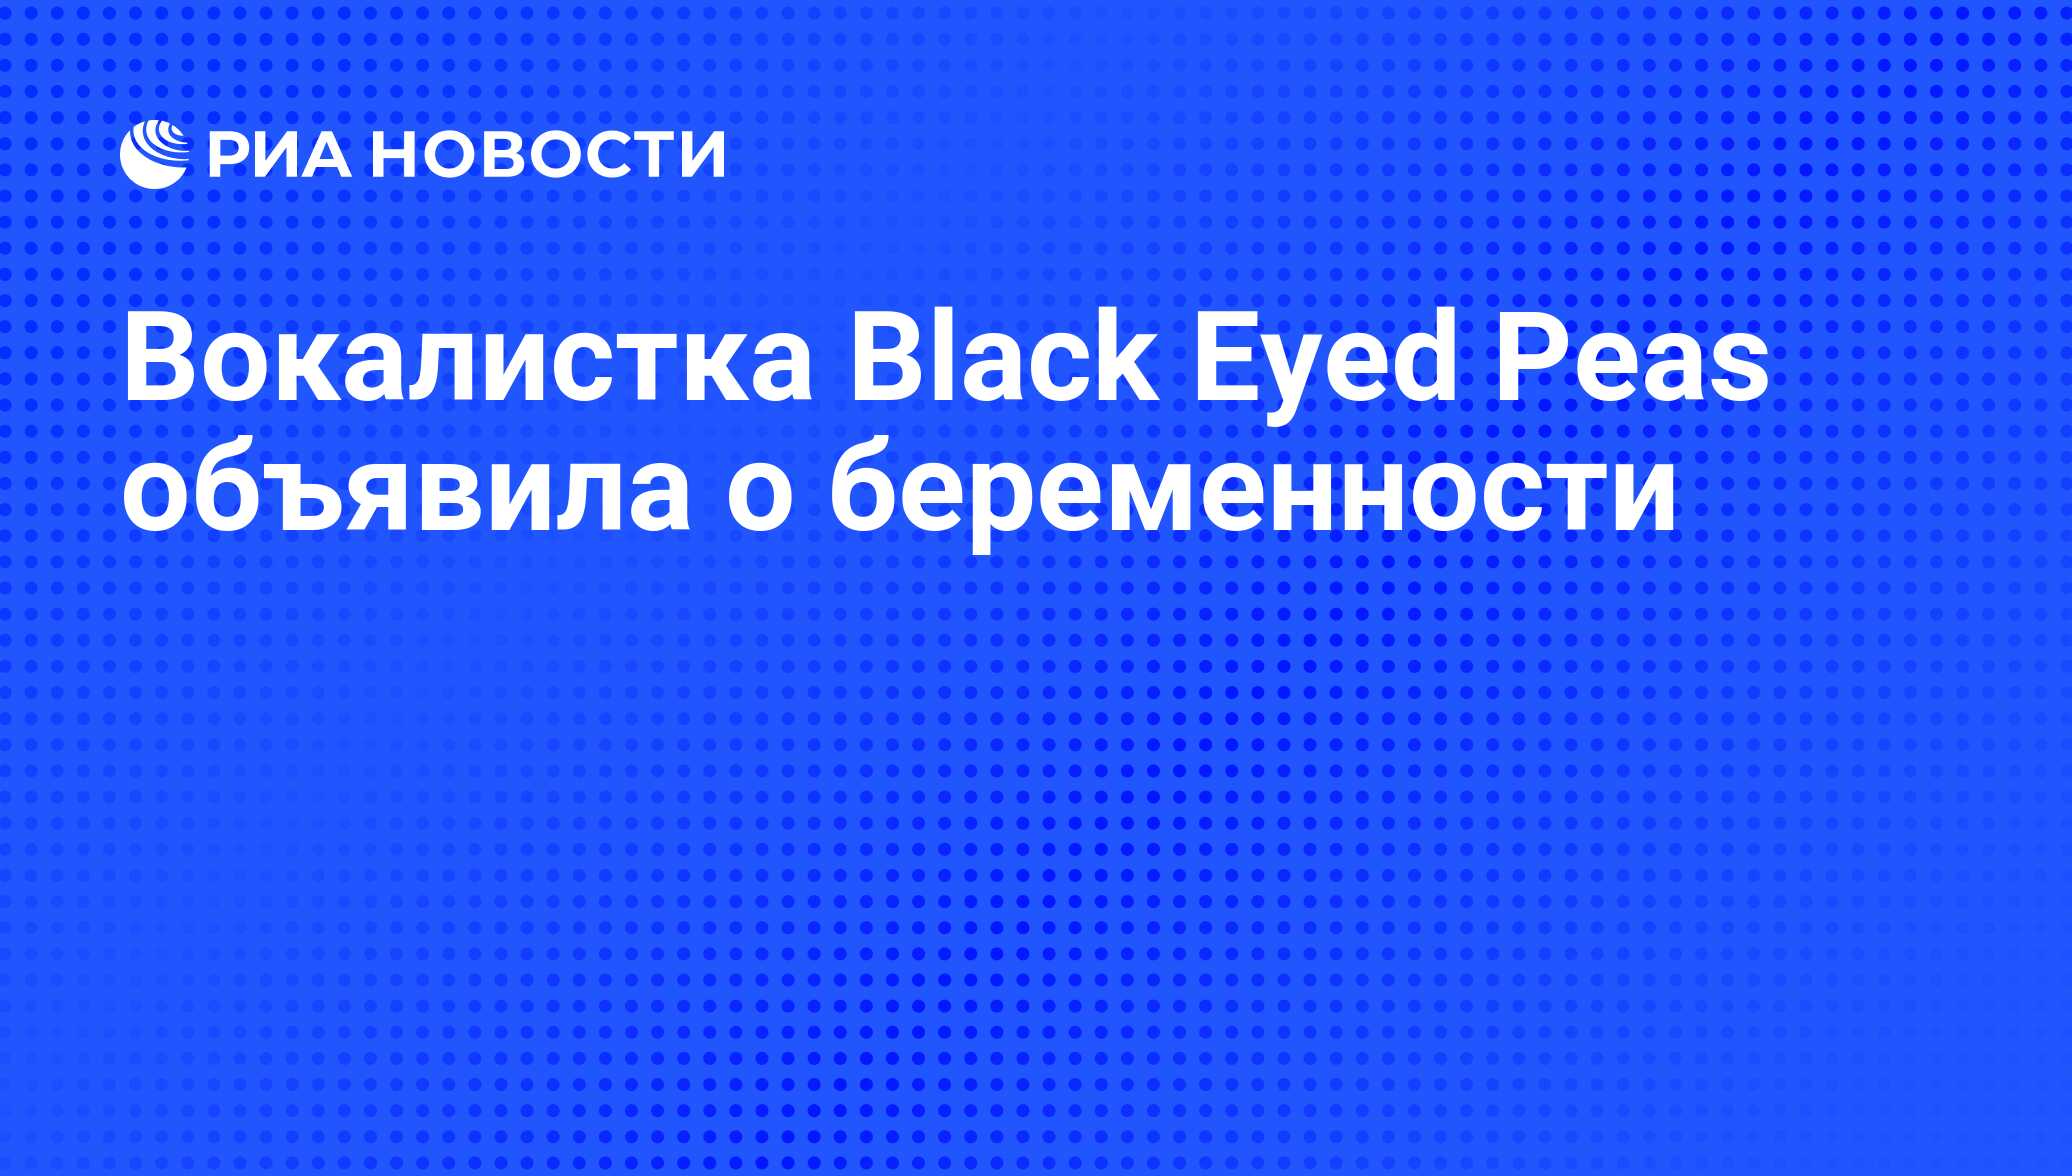 Вокалистка Black Eyed Peas объявила о беременности - РИА Новости, 19.02.2013